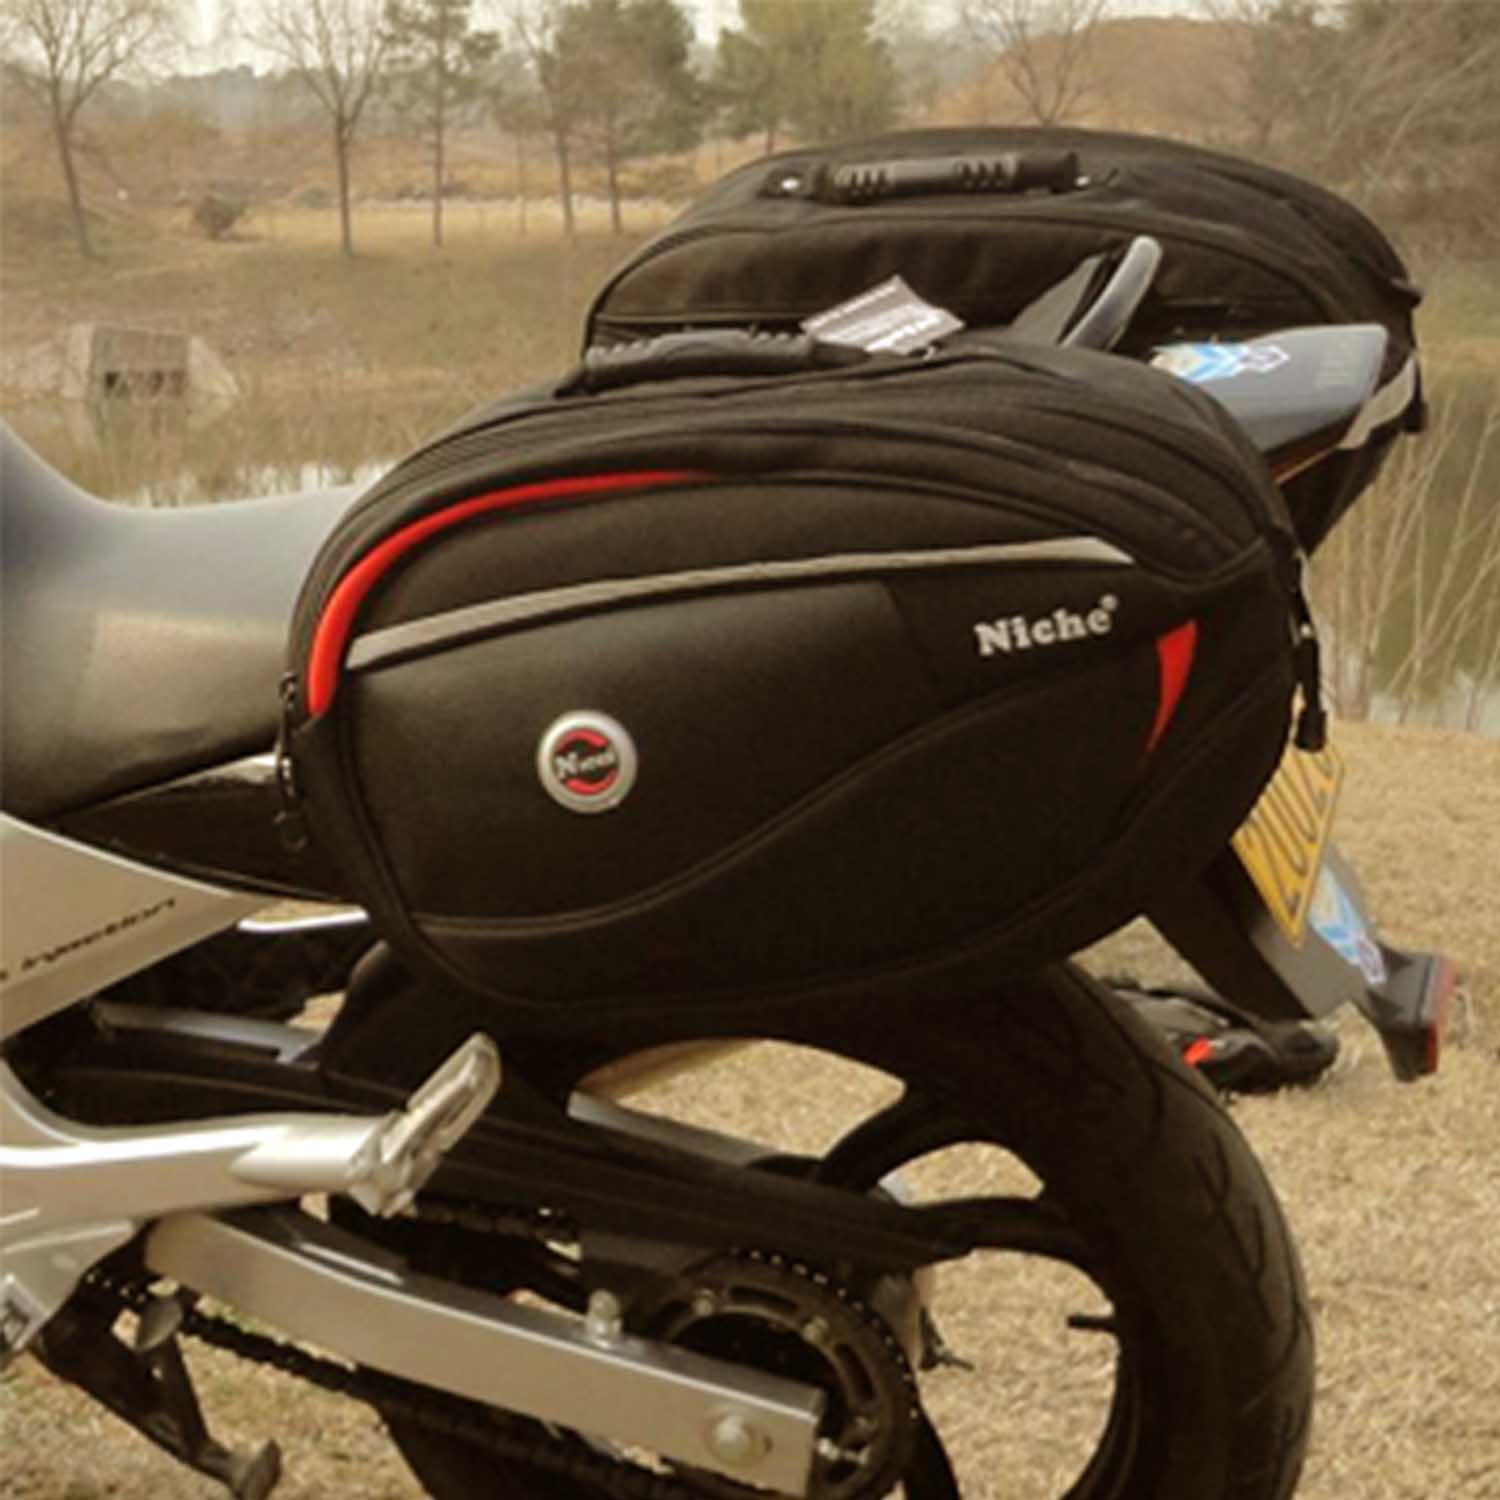 podemos hacer bolsas de motocicleta personalizadas, alforjas, bolsas de asiento, alforjas, bolsa lateral, material impermeable.